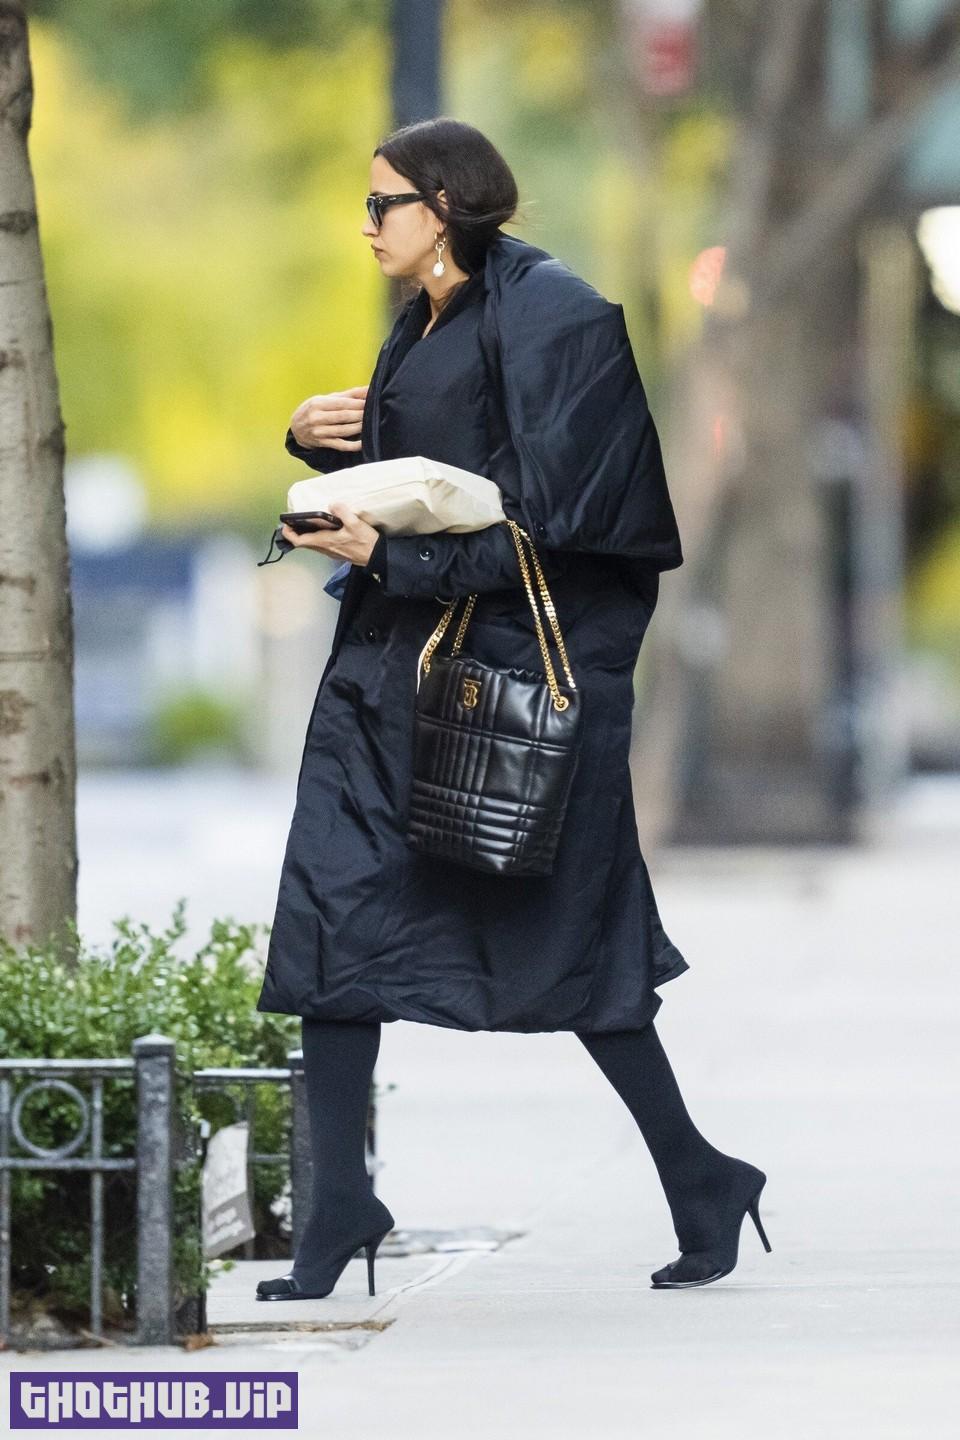 Irina Shayk Hot At Fashion Trust Arabia And Next To Bradley Cooper's House